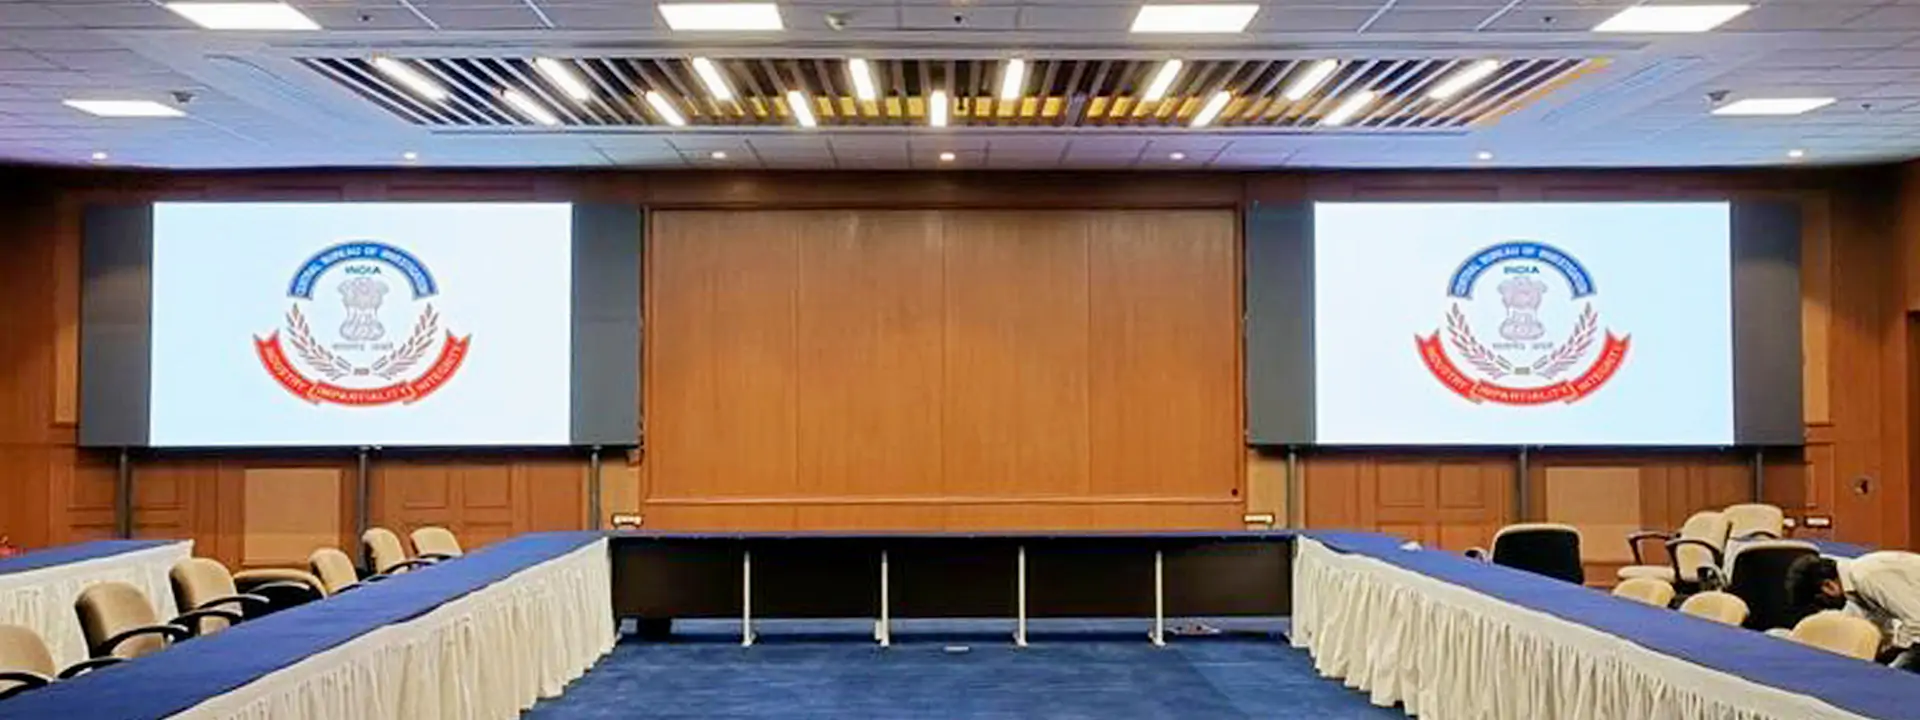 Boardroom Display solution in CBI